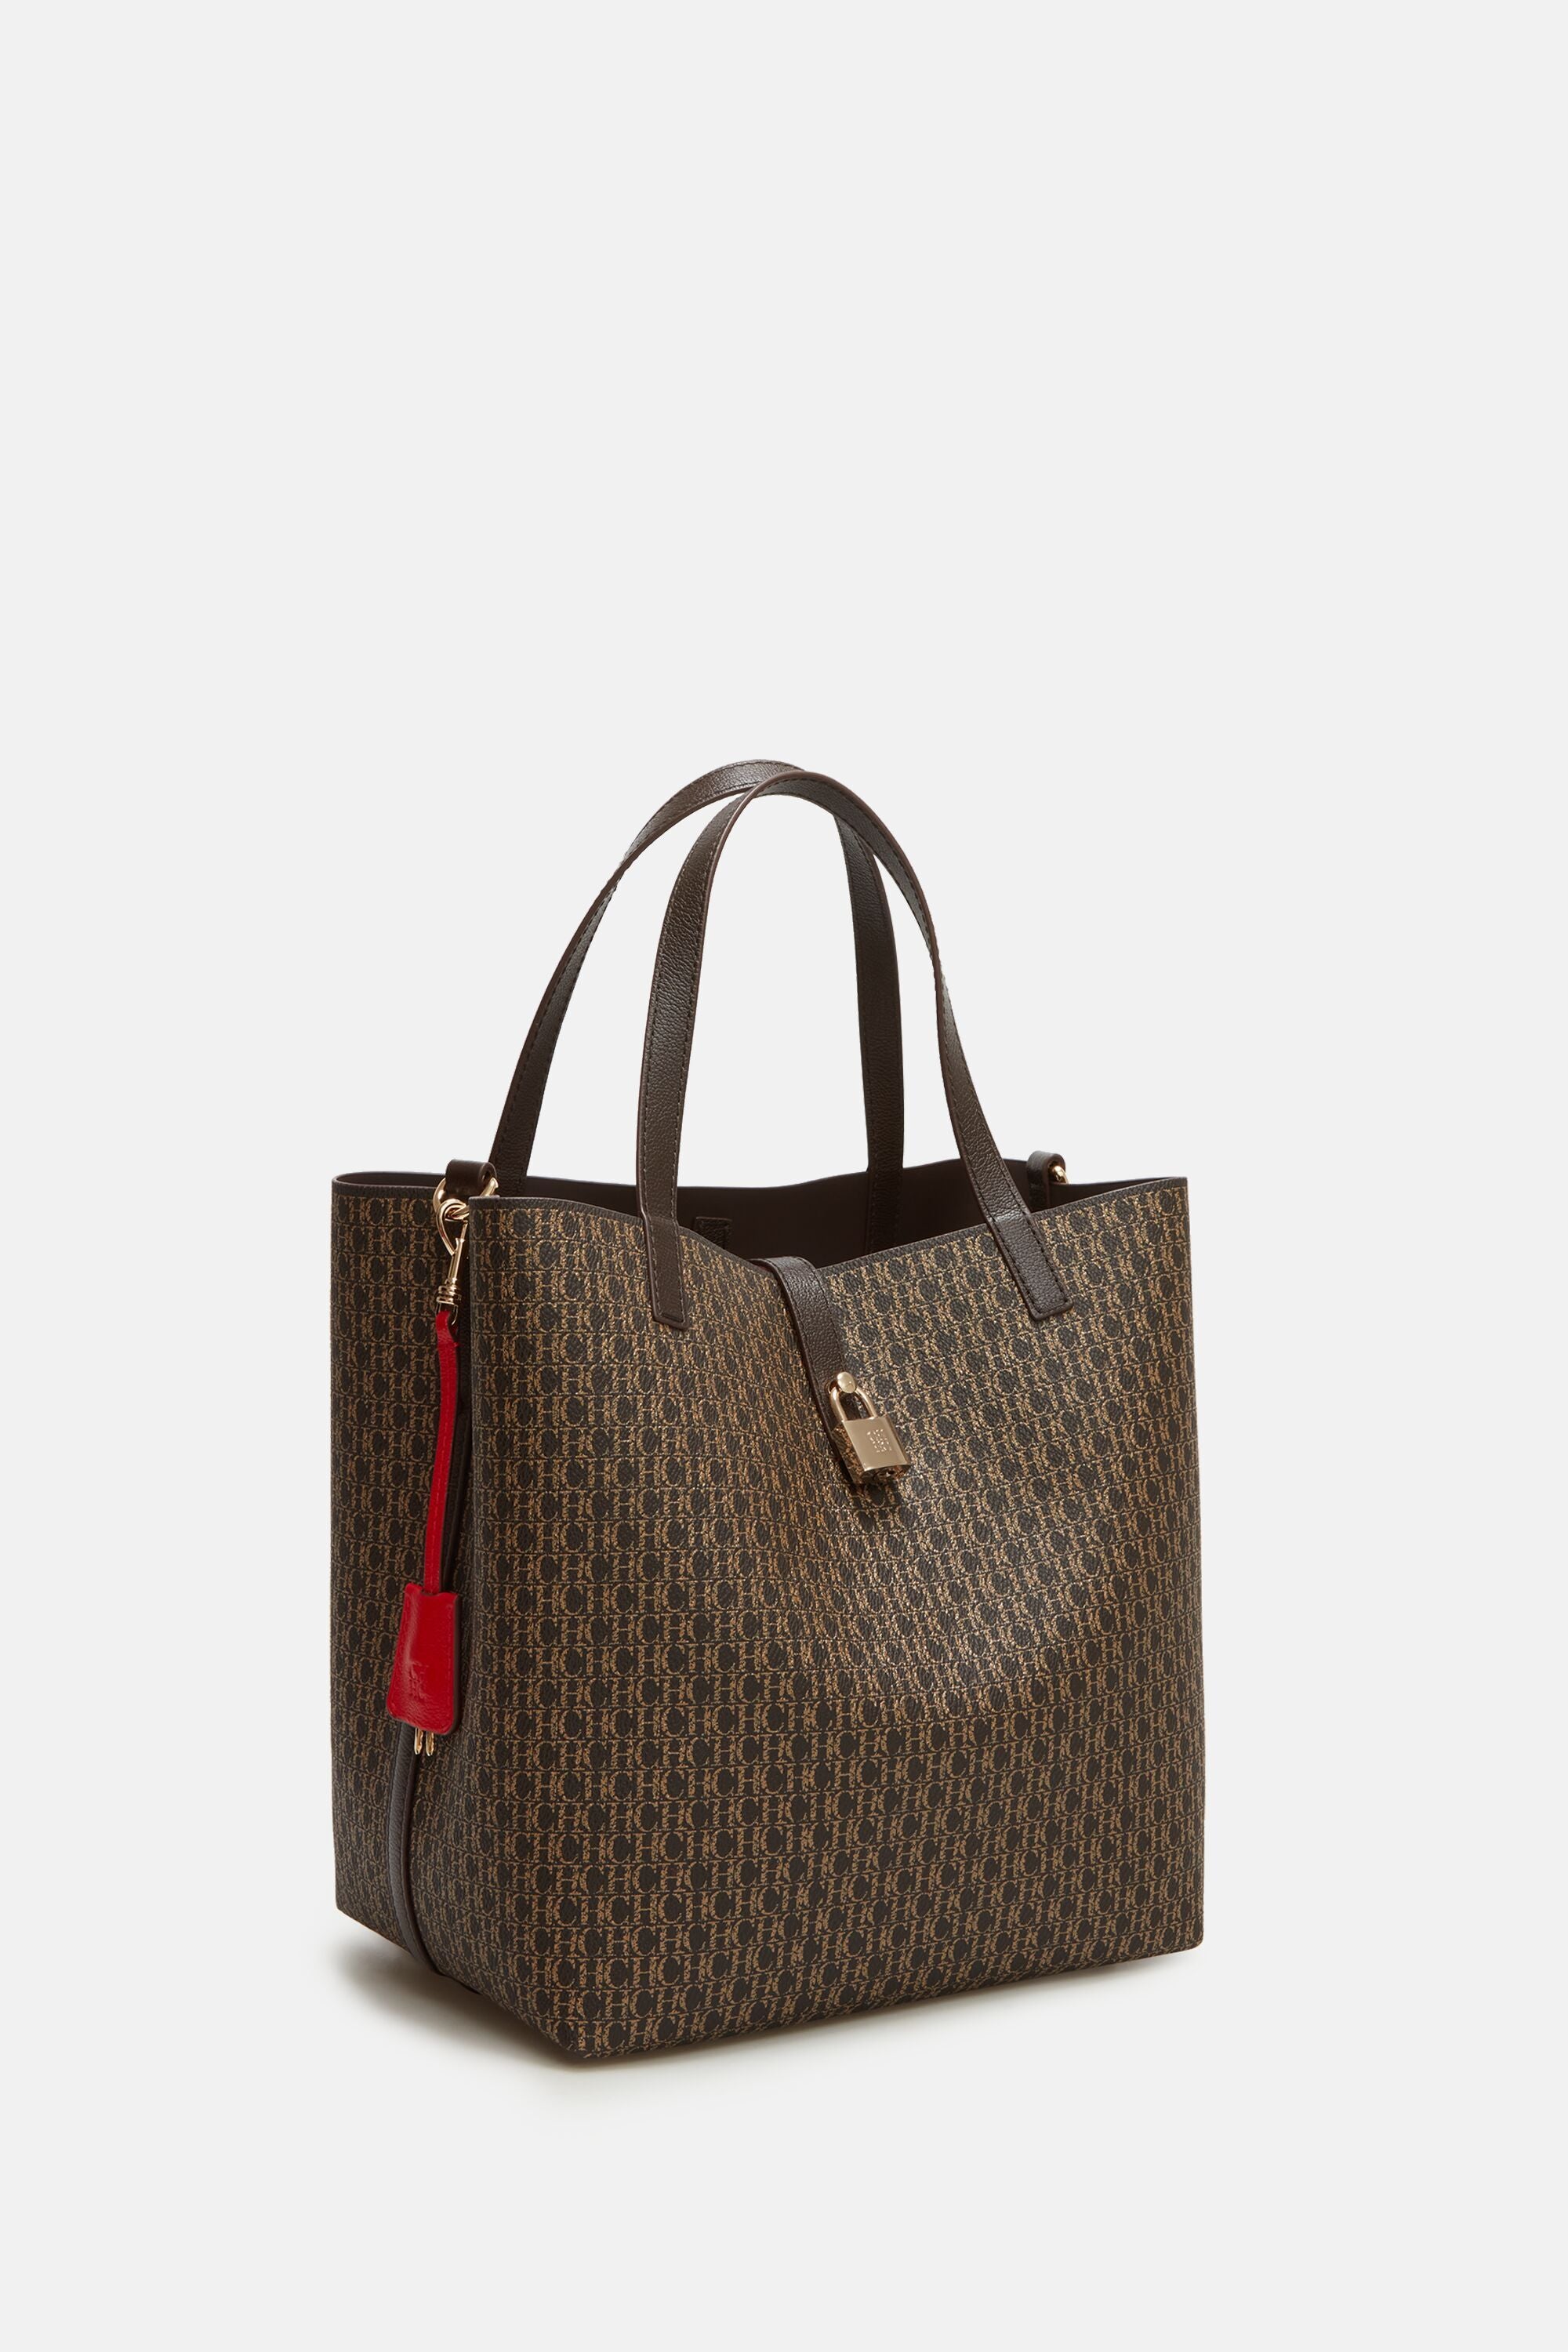 Men Puma Fila Duffle Bags - Buy Men Puma Fila Duffle Bags online in India